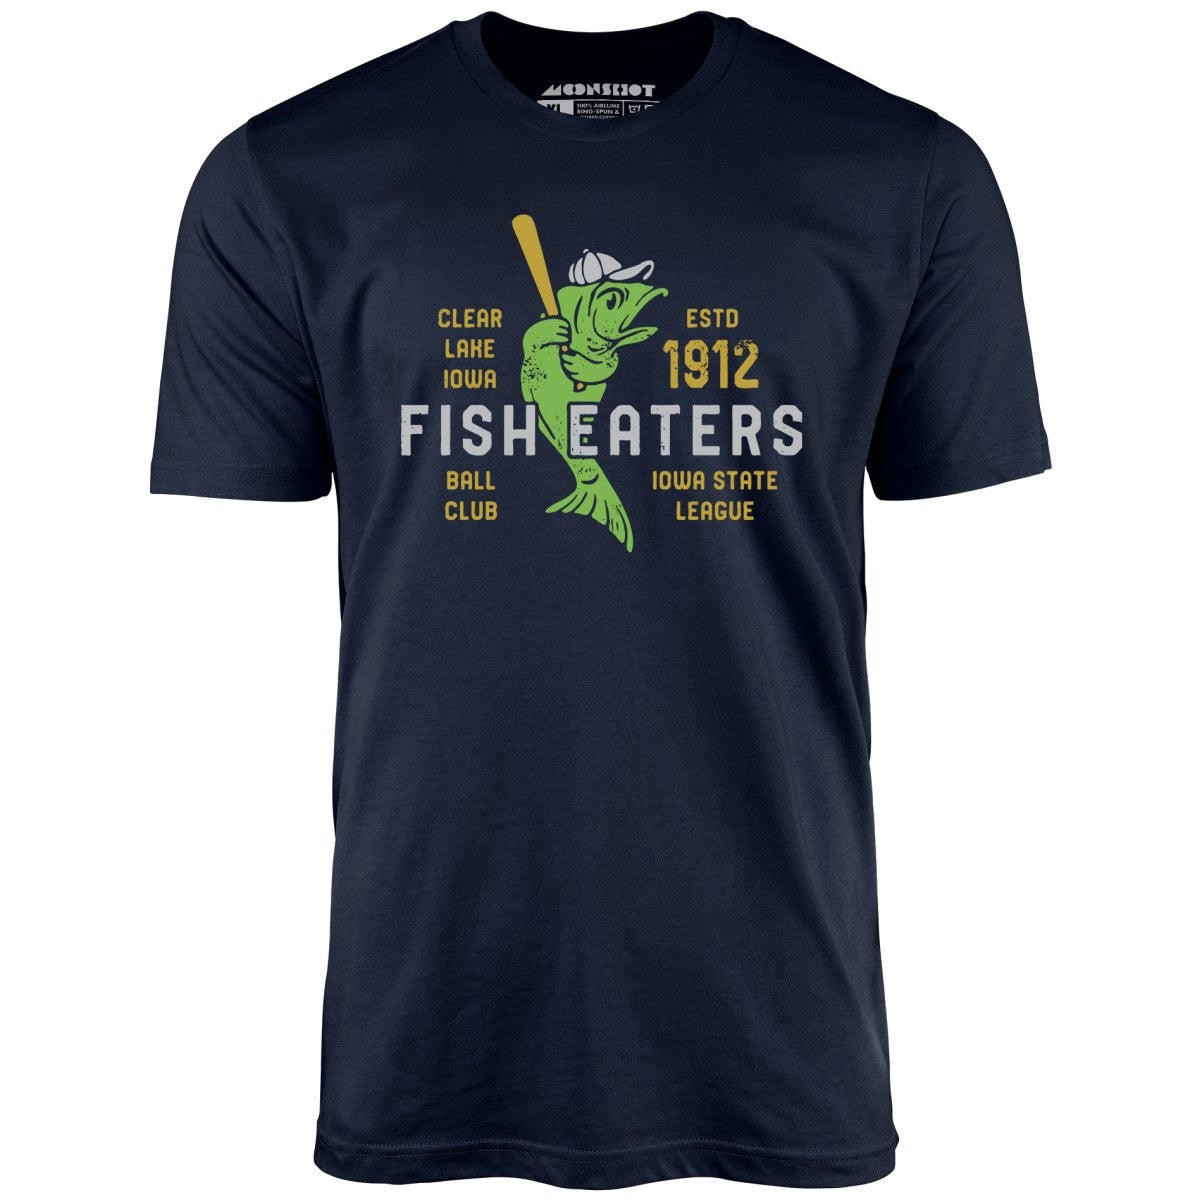 Clear Lake Fish Eaters - Iowa  - Vintage Defunct Baseball Teams - Unisex T-Shirt